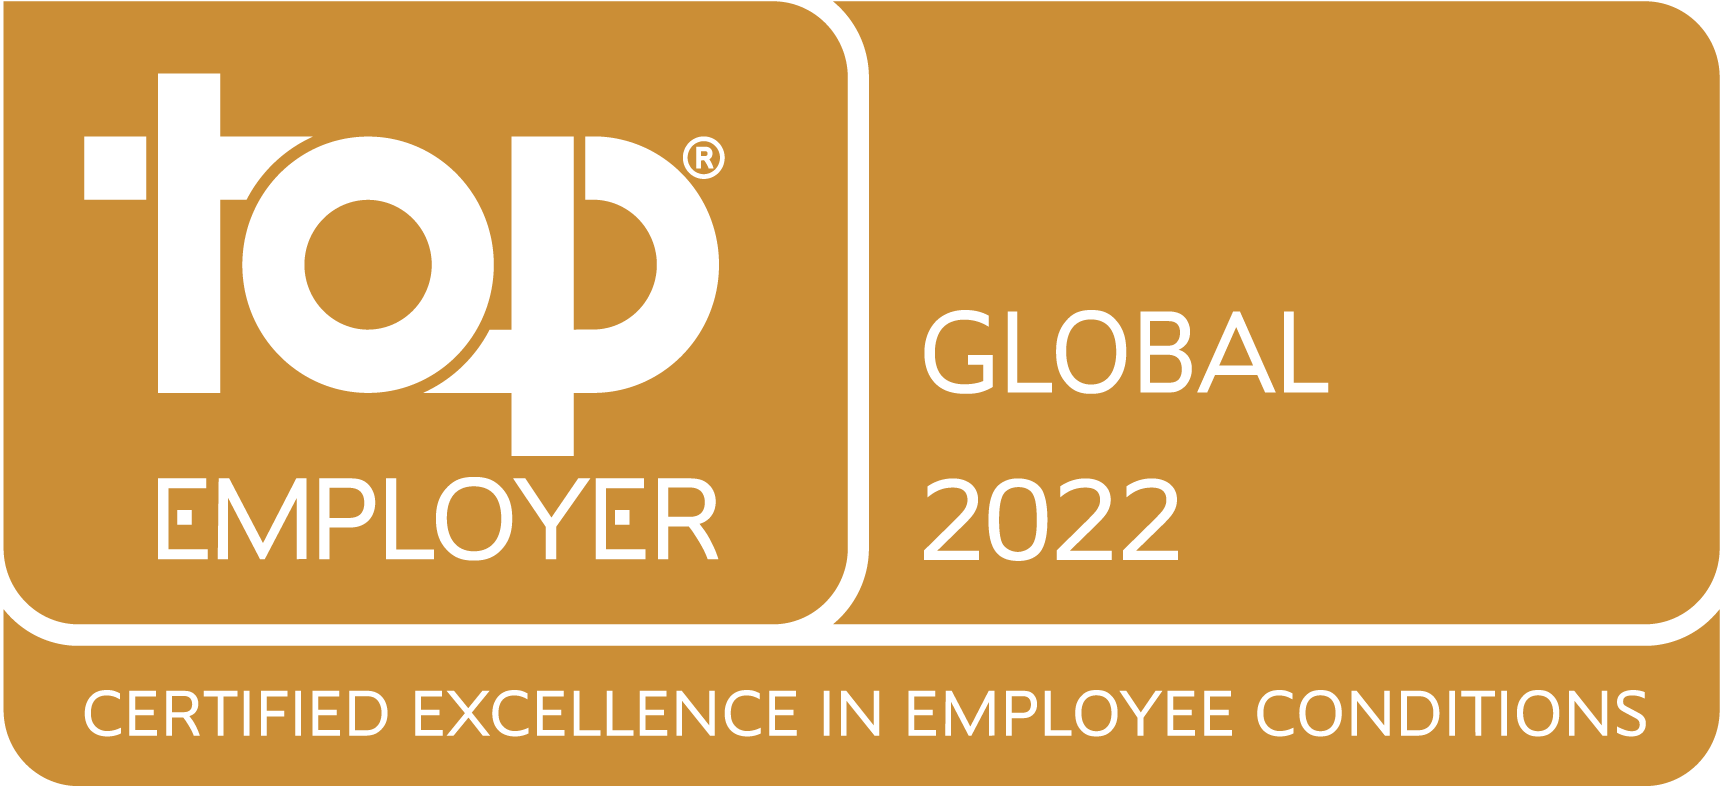 Top_Employer_Global_2022